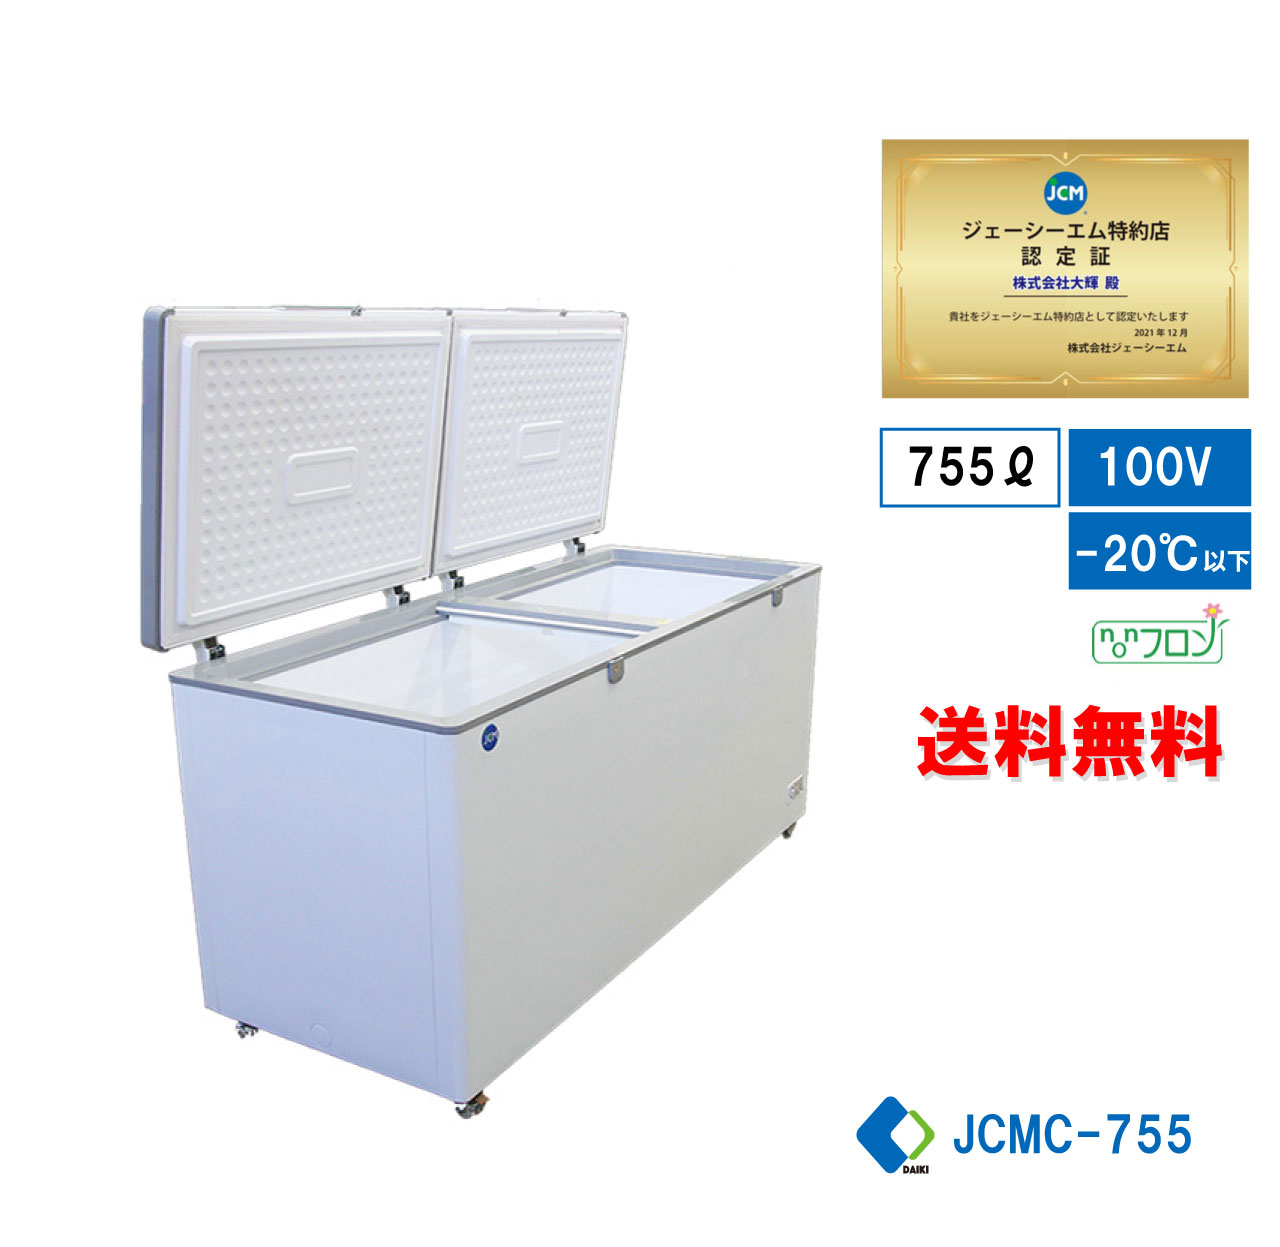 JCMC-755 業務用 JCM 冷凍ストッカー JCMC-755 冷凍庫 フリーザー 755L 